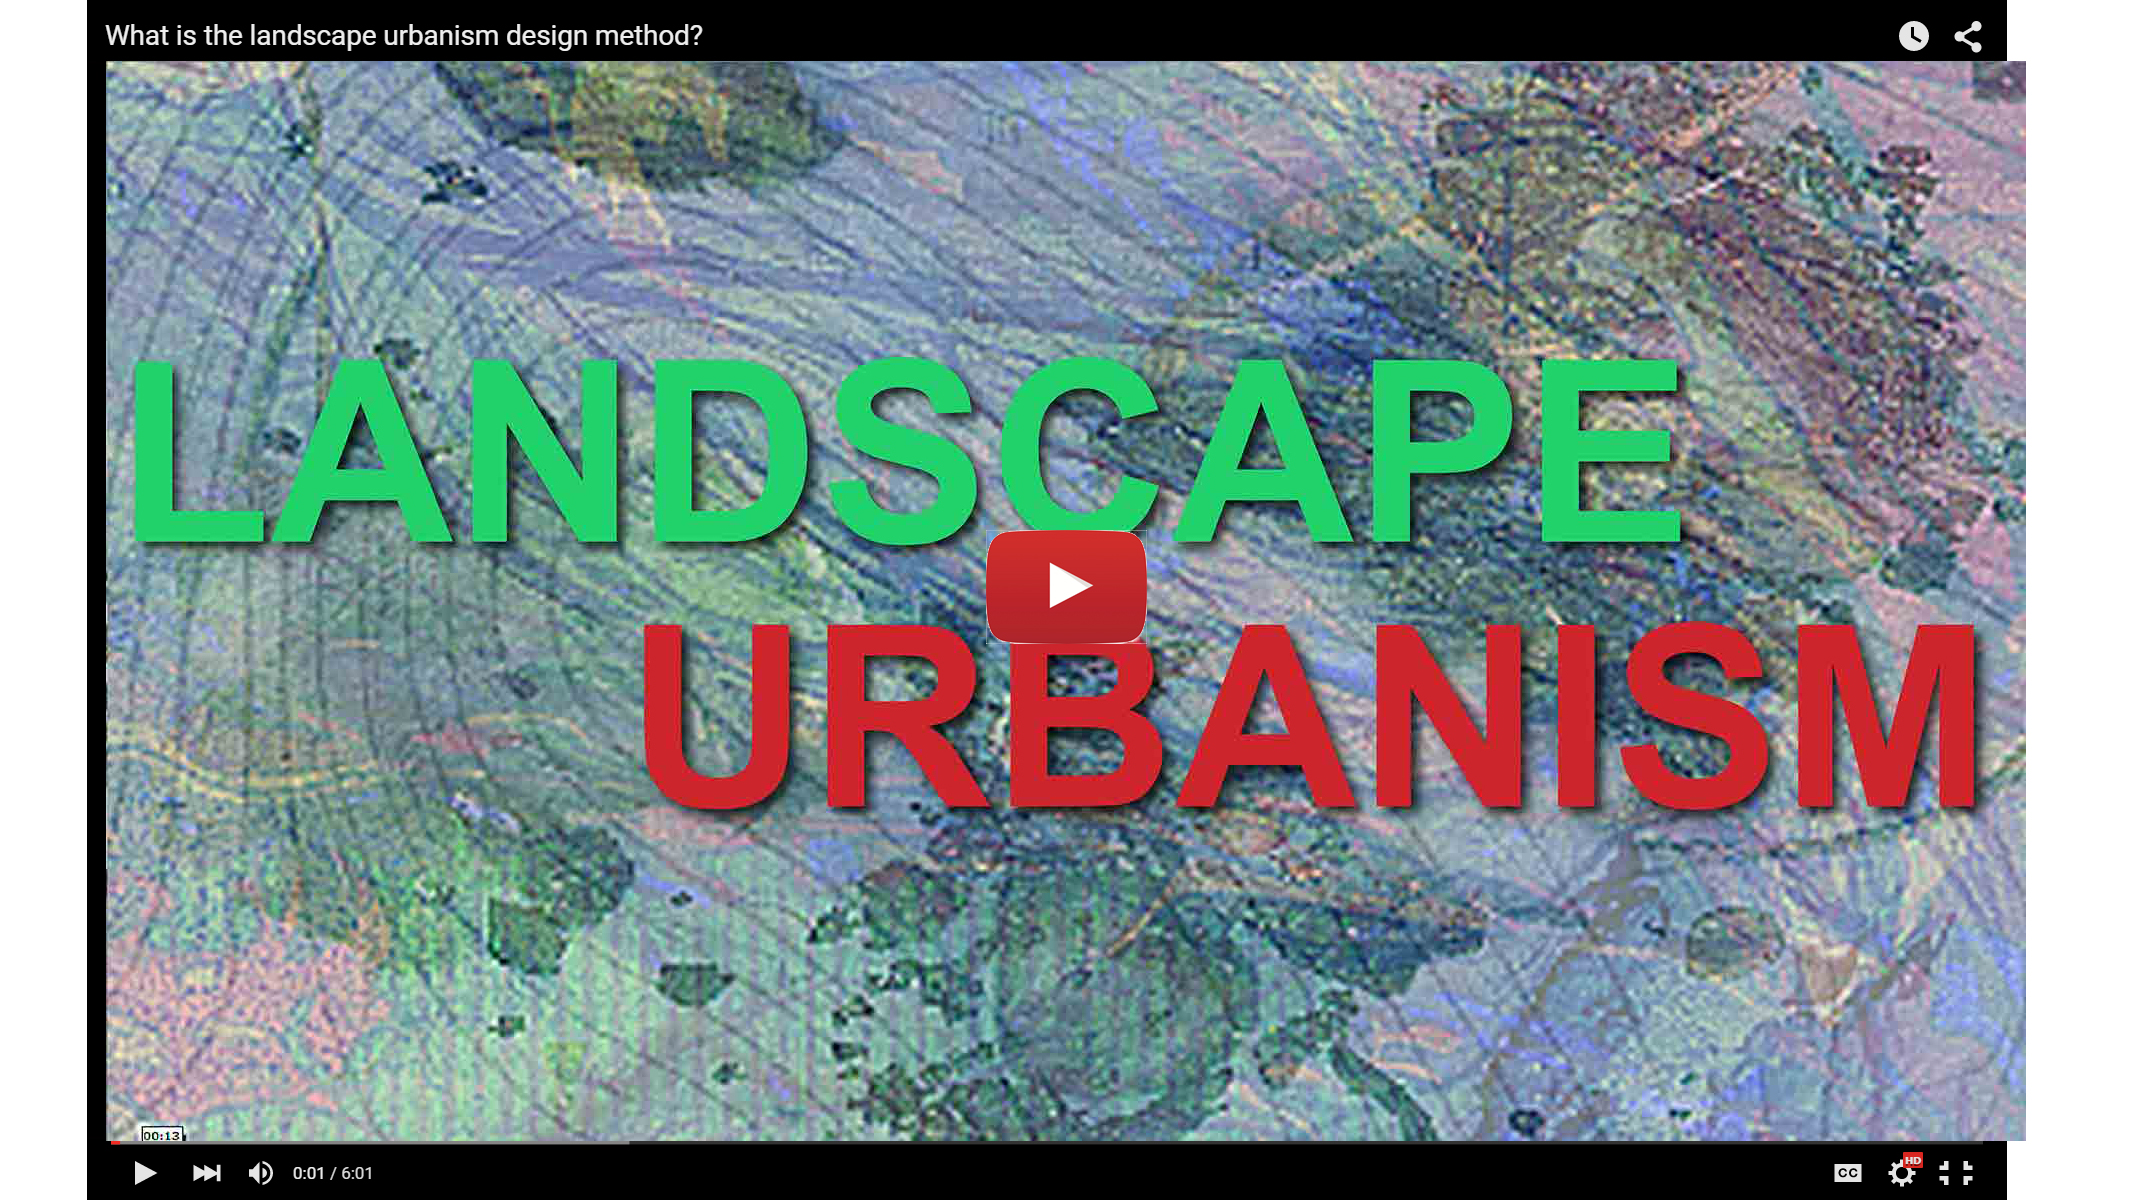 Landscape urbanism definition